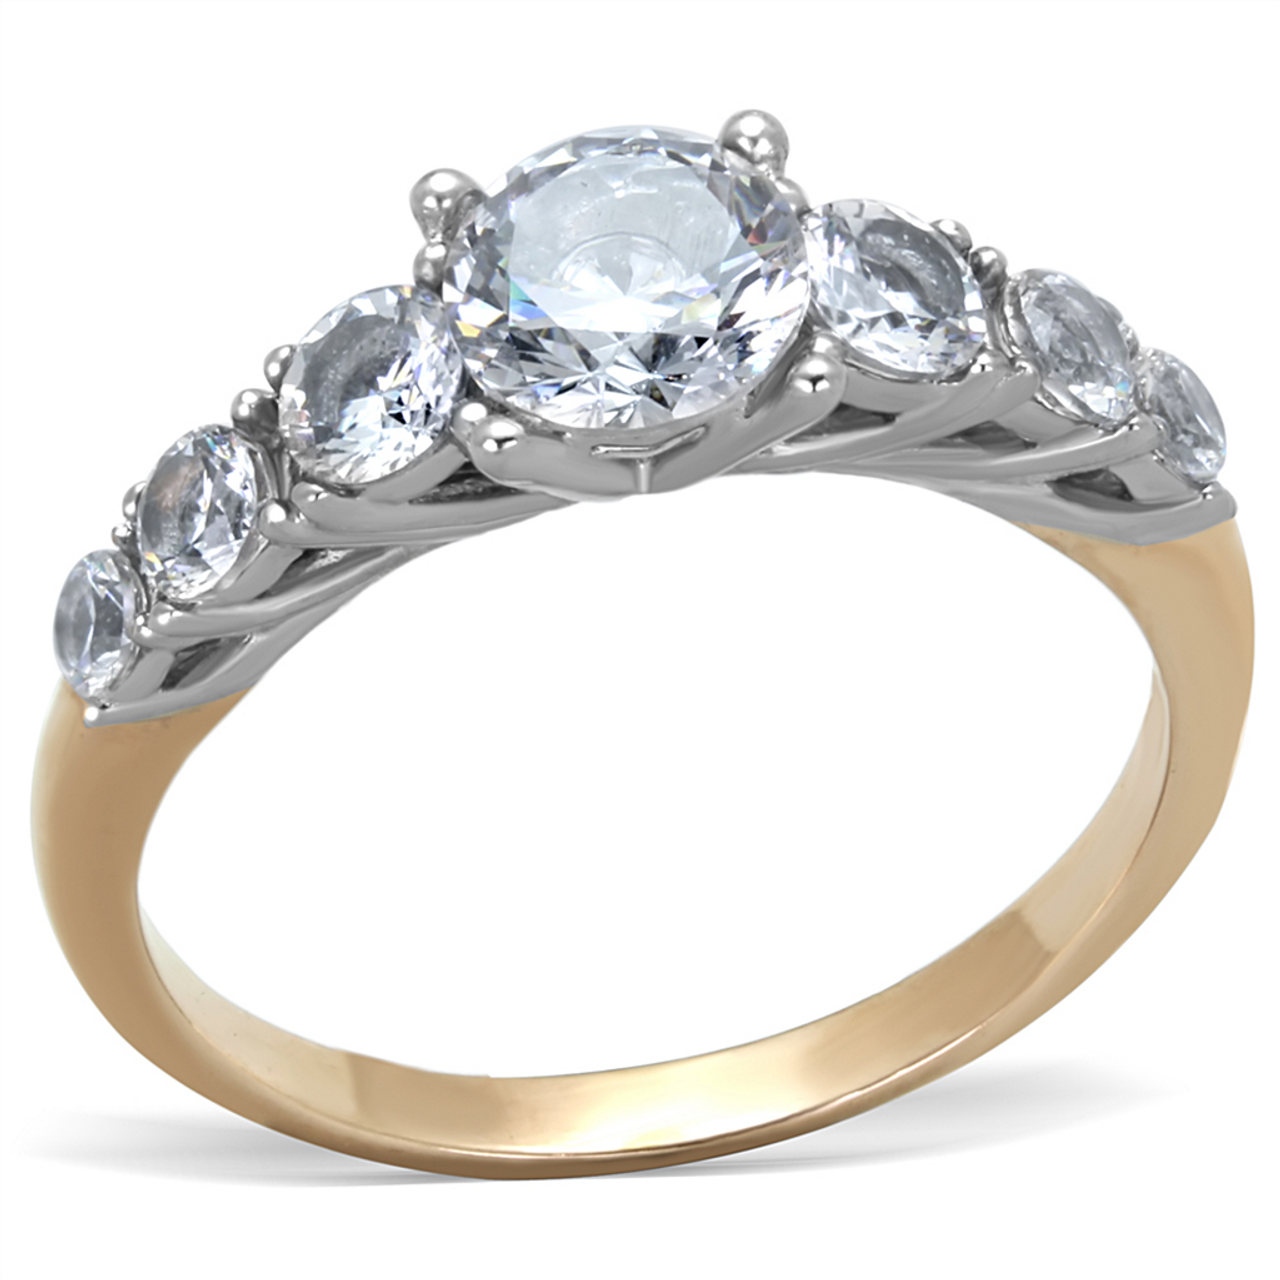 2 Wedding Rings Engangement Stainless Steel Bi-Color Silver Gold & Engraving 